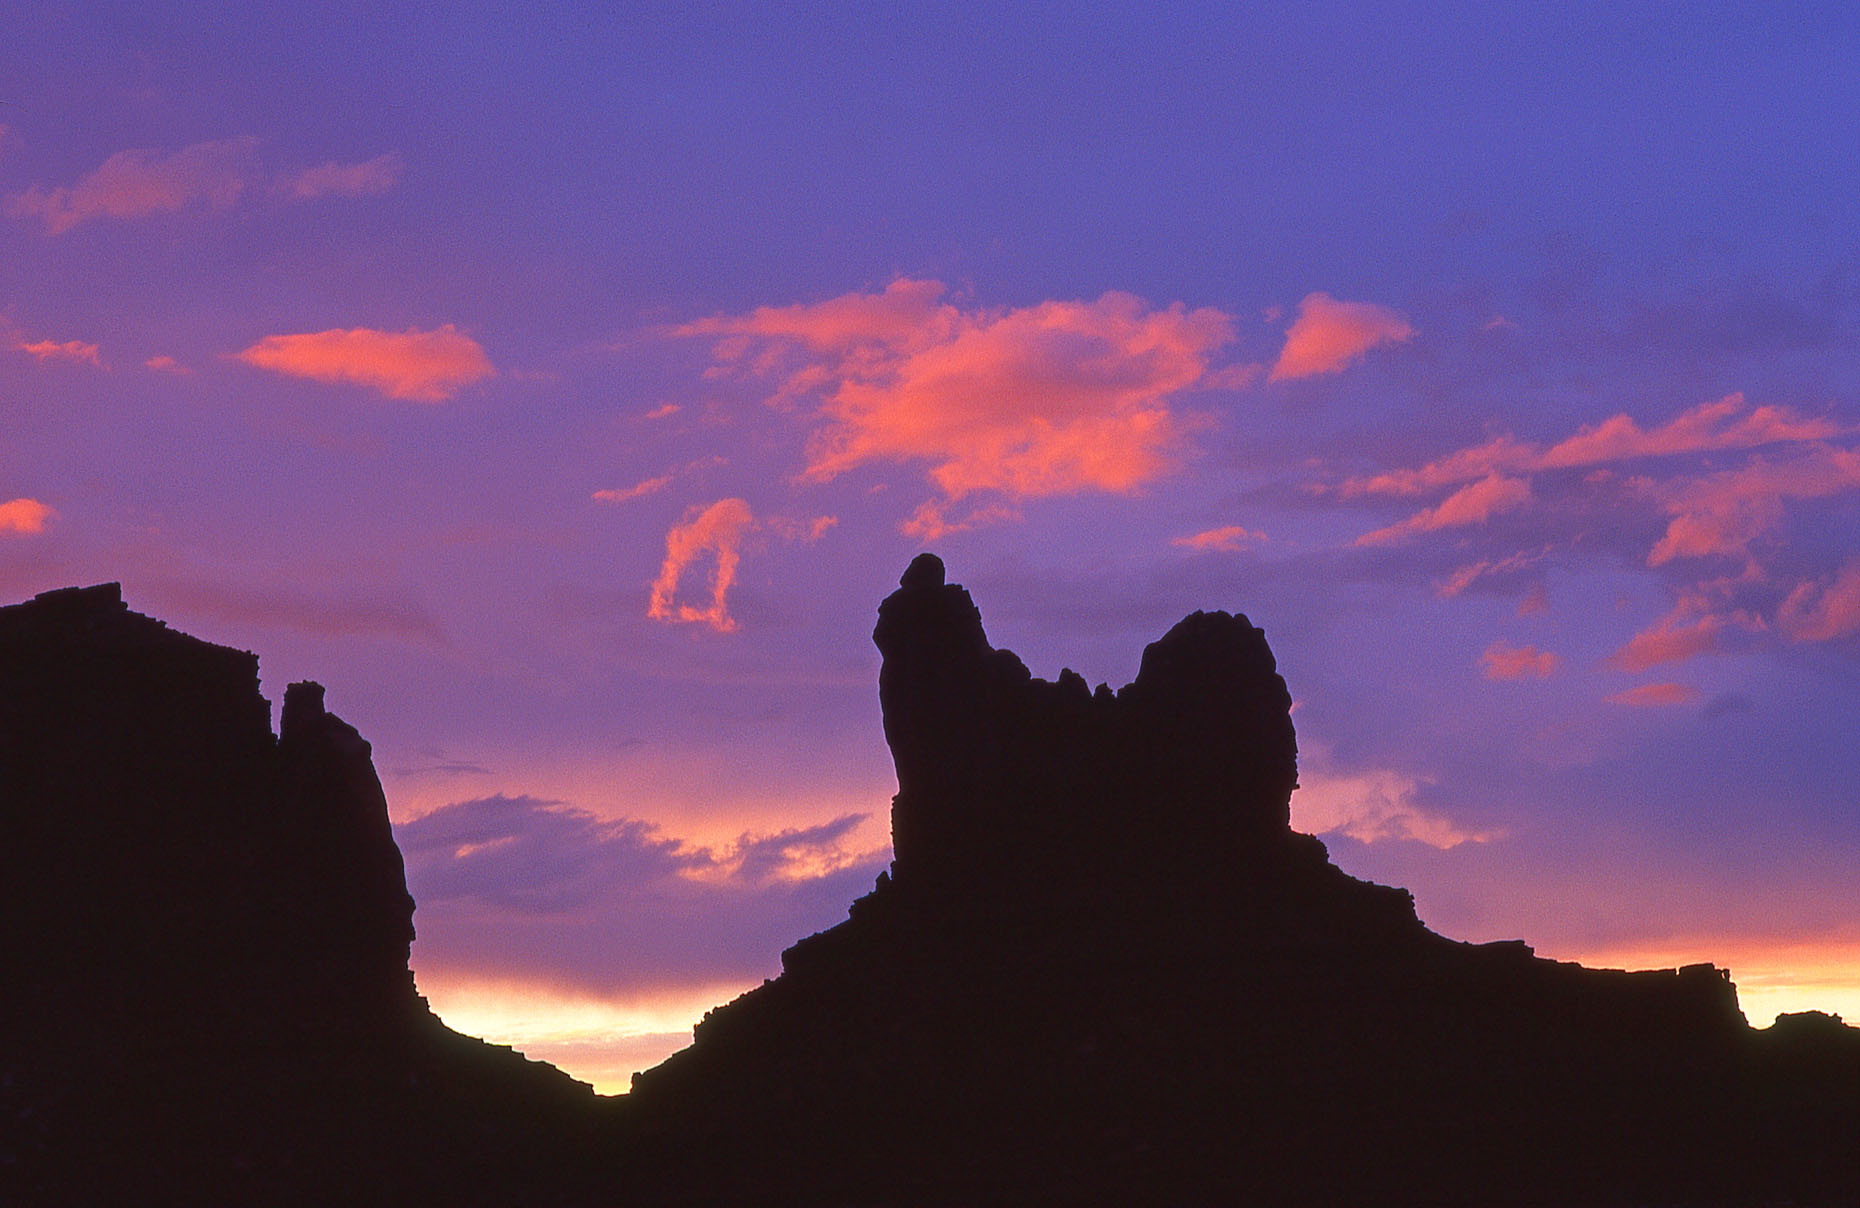 Eagle Mesa, Monument Valley Navajo Tribal Park. John Annerino, Utah-Arizona